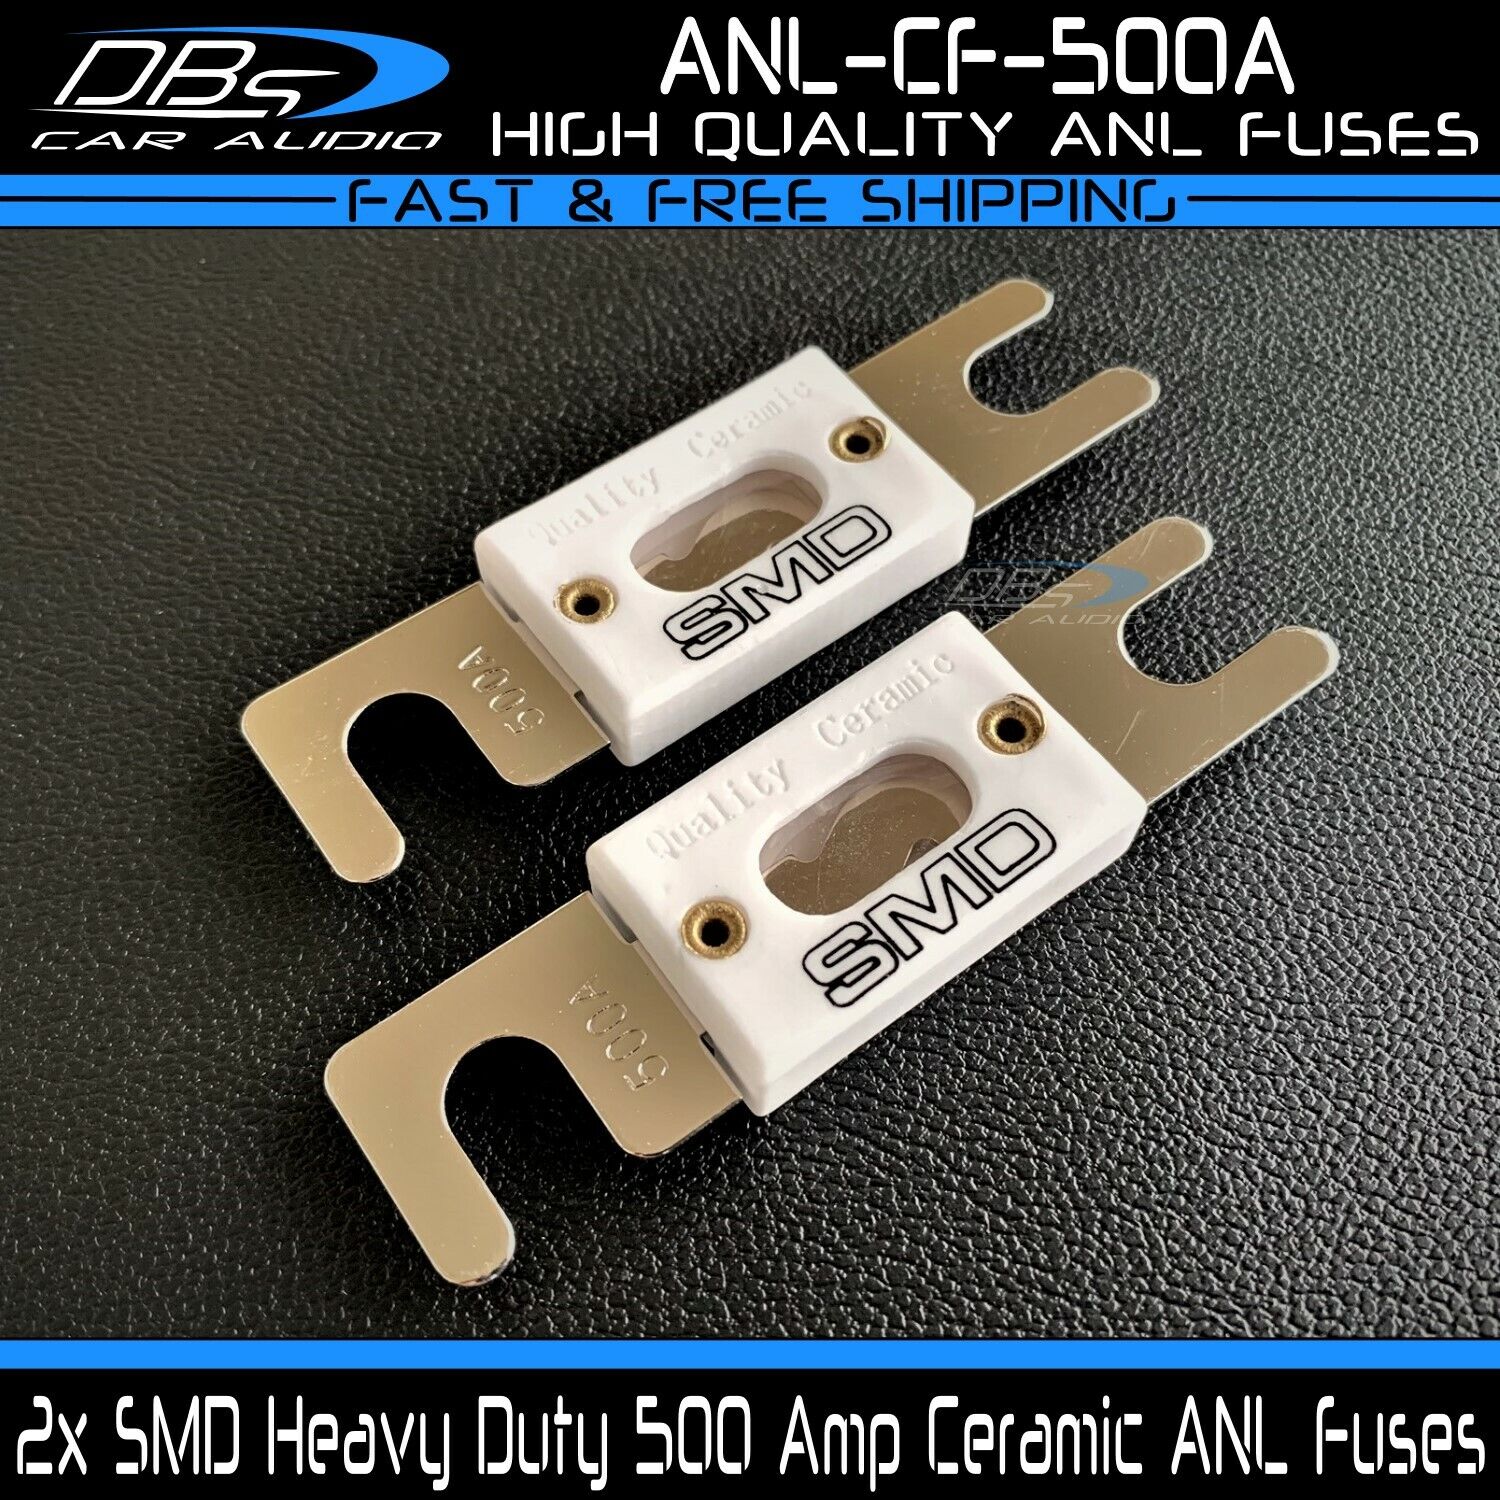 2x Steve Meade SMD 500 Amp Ceramic ANL Fuse 500A Heavy Duty High Quality Fuses SMD ANL-CF-500A ANL CF-500A